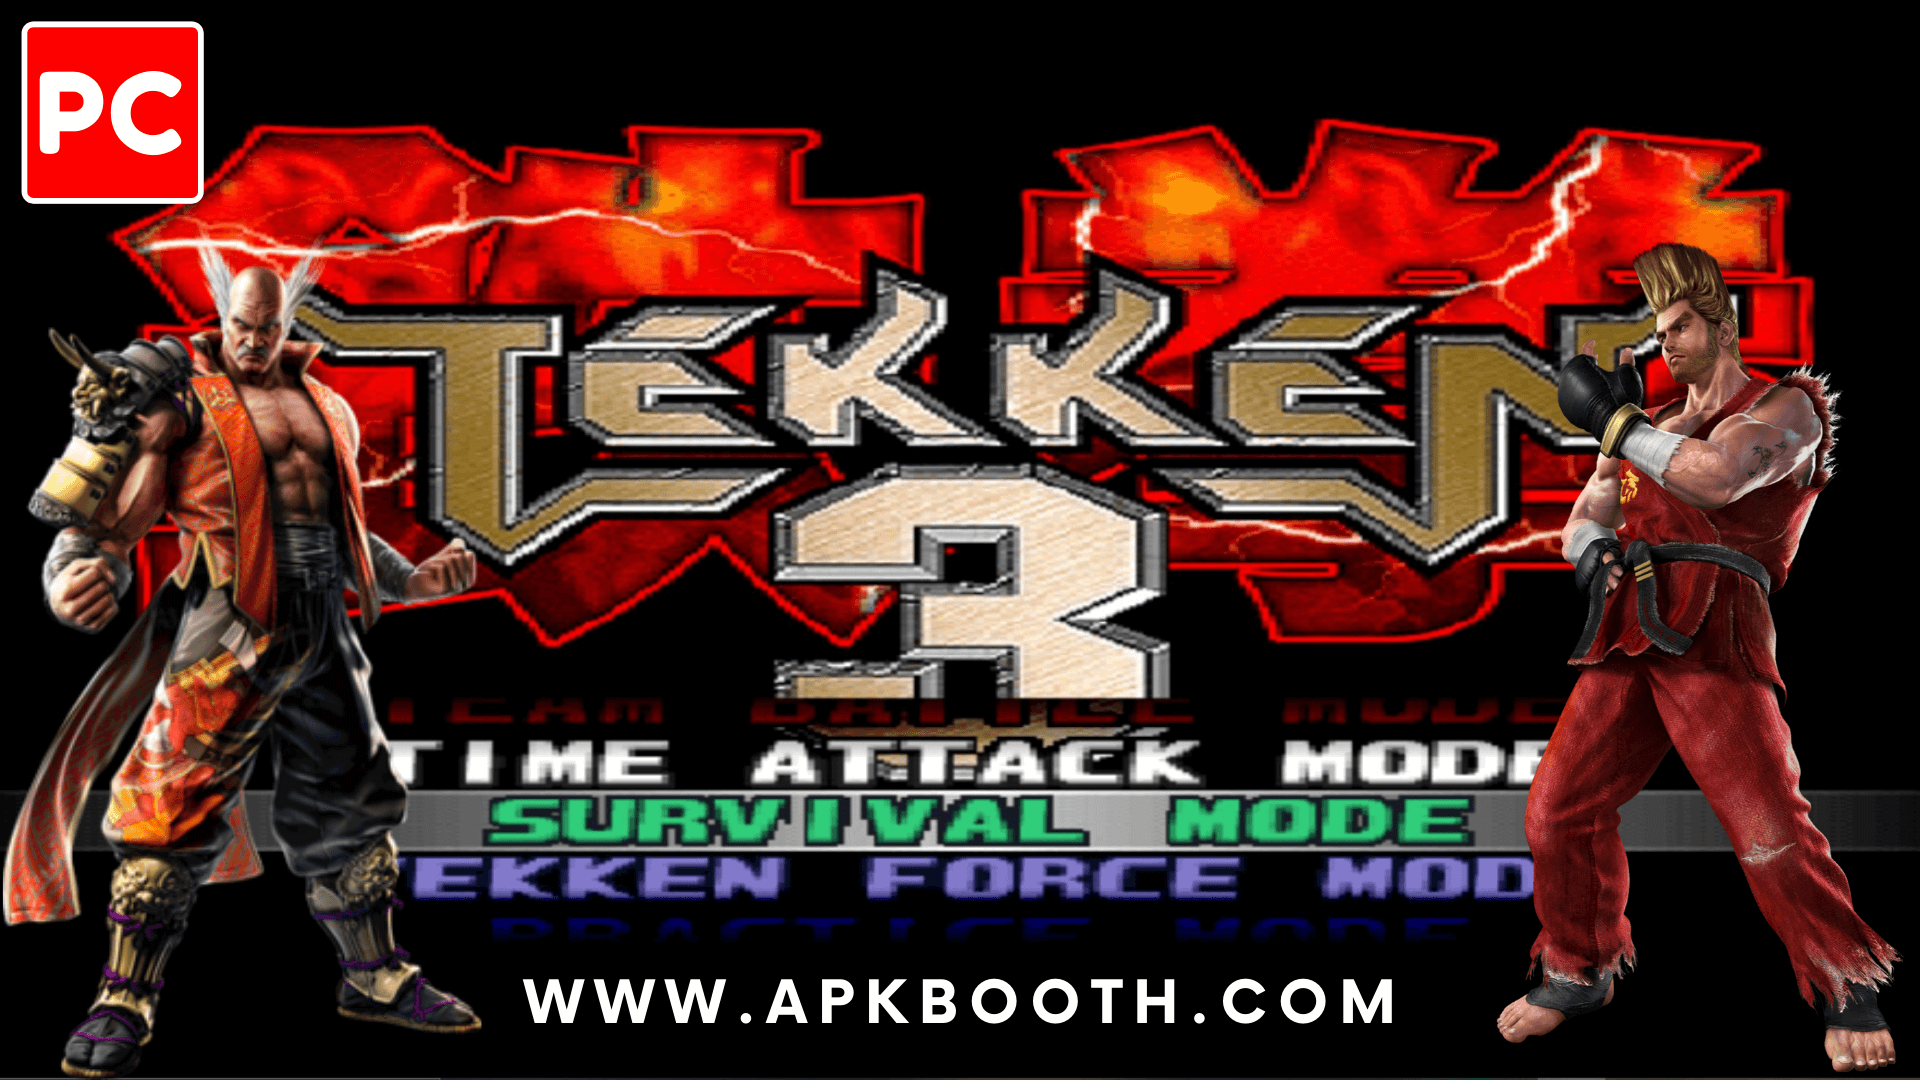 tekken 3 download for android